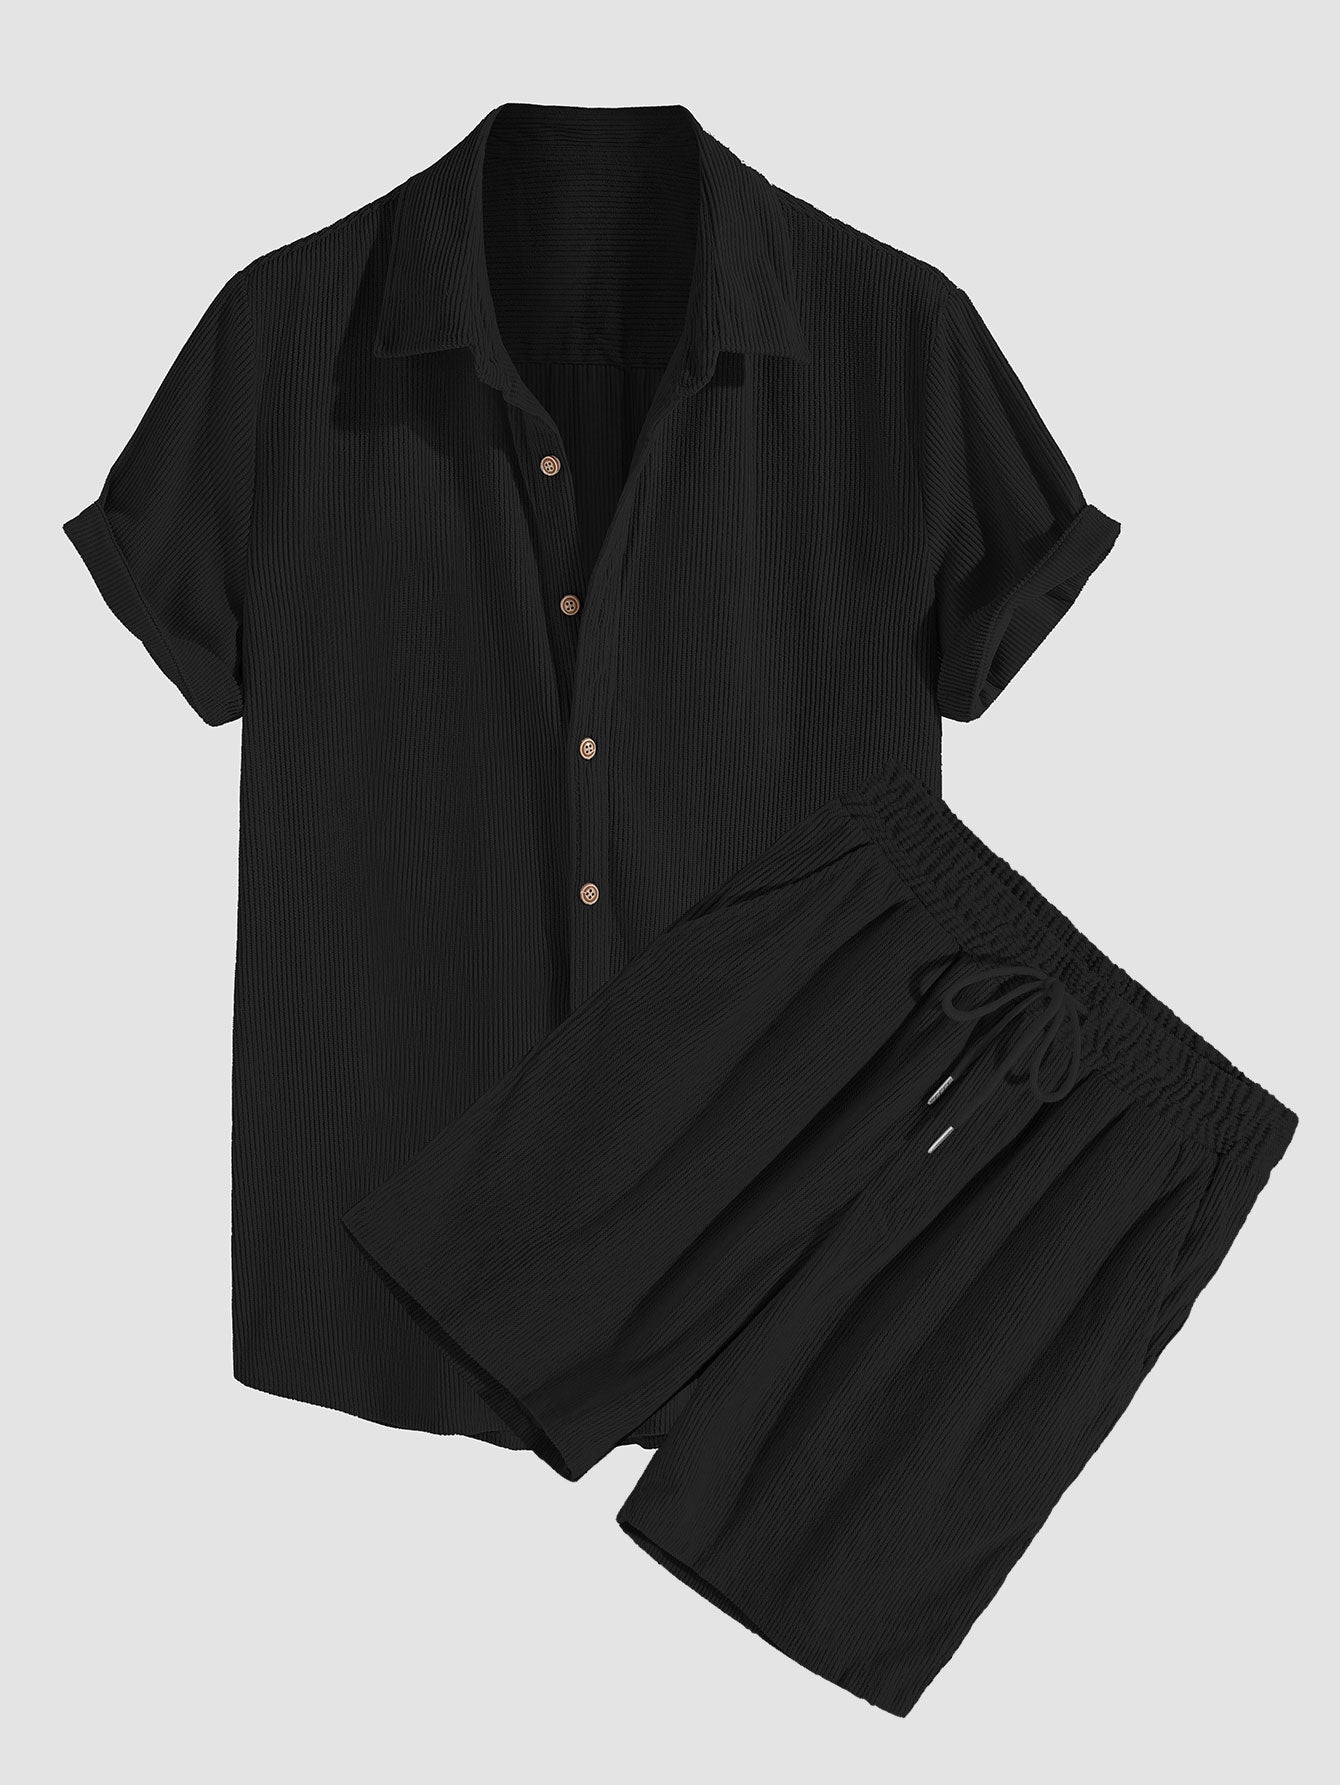 CRERI Short-Sleeved Corduroy Button Up Shirt & Shorts